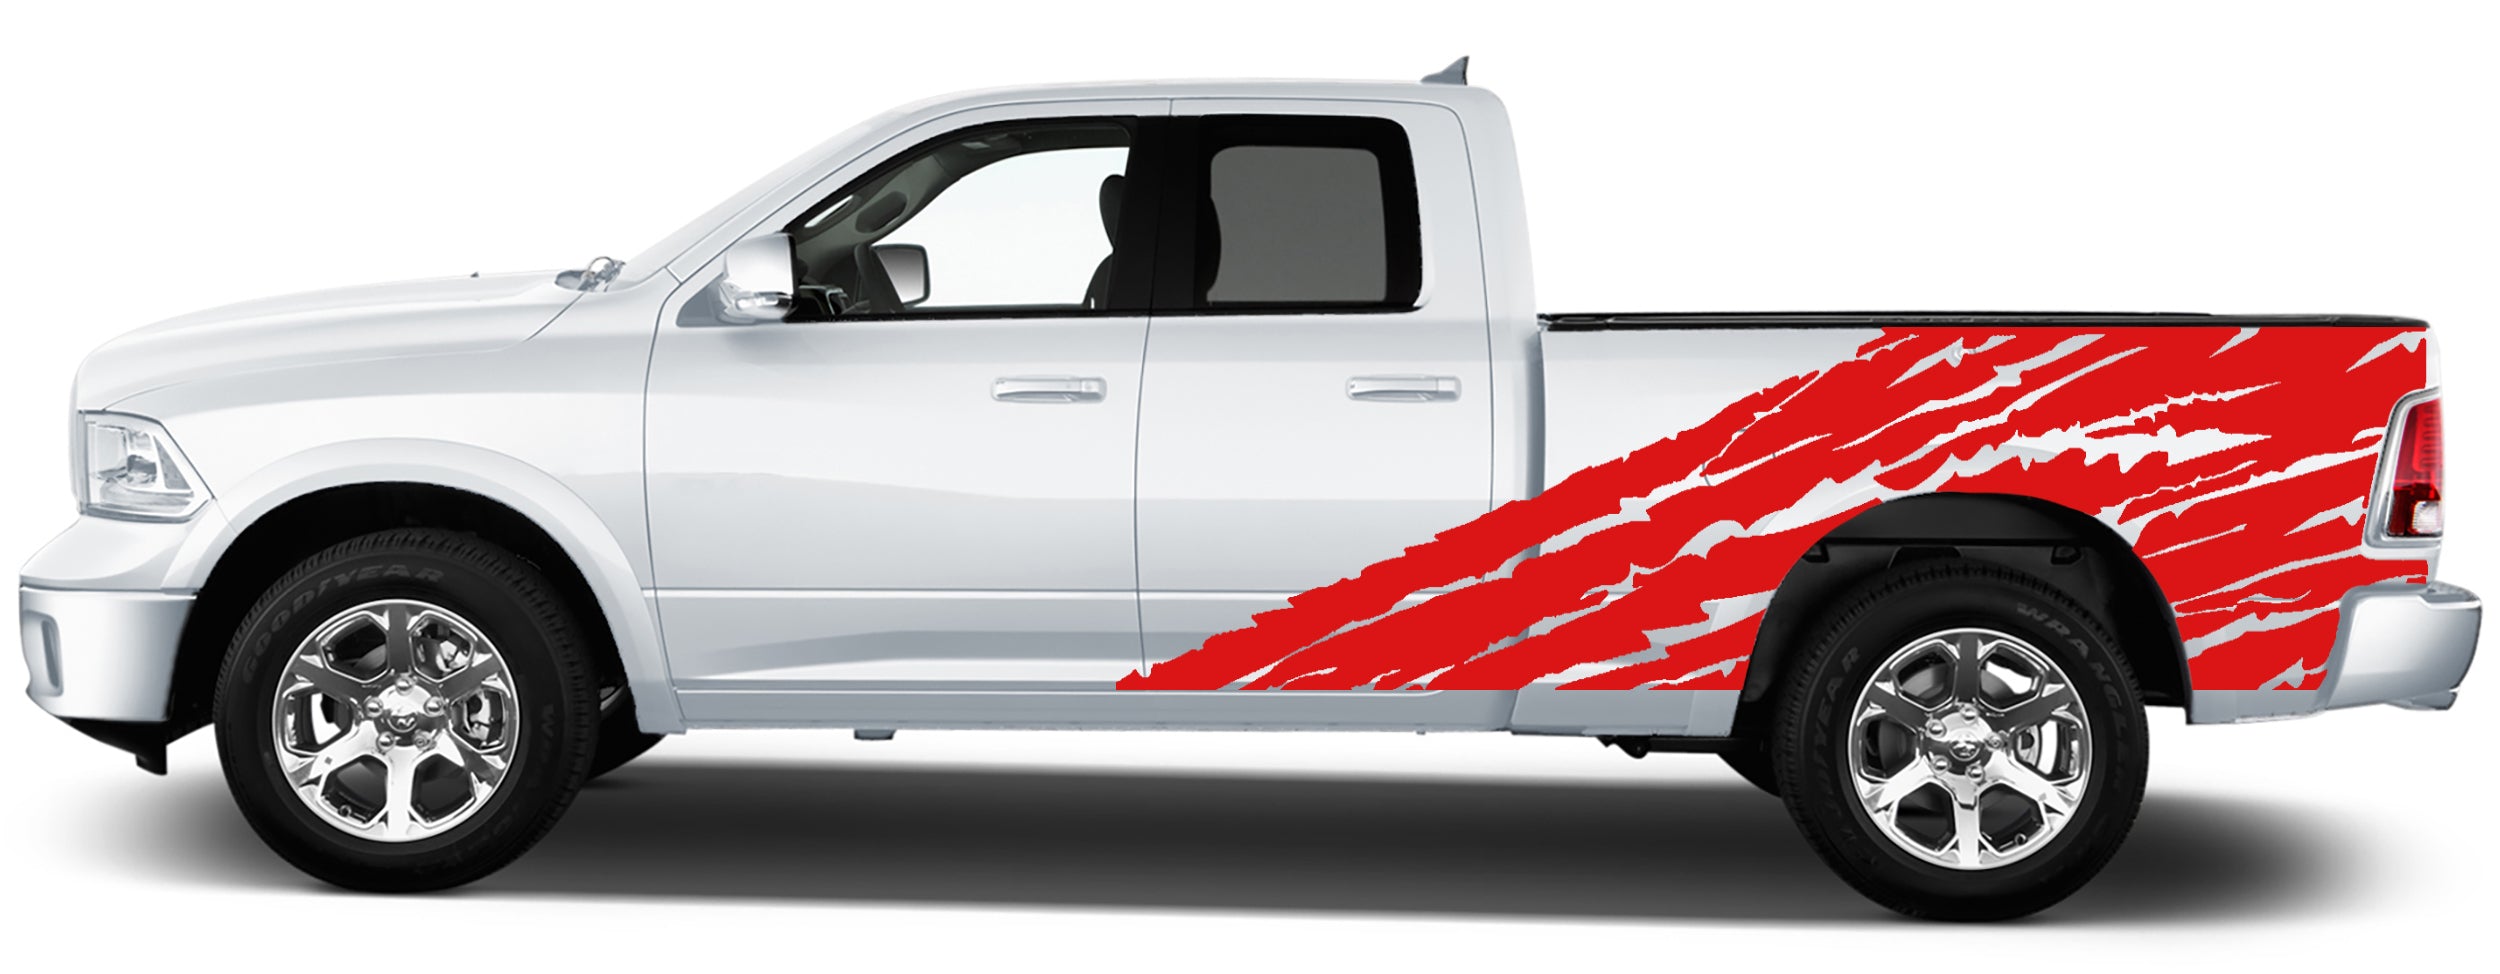 half side shred side graphics for dodge ram 2008 to 2018 models red